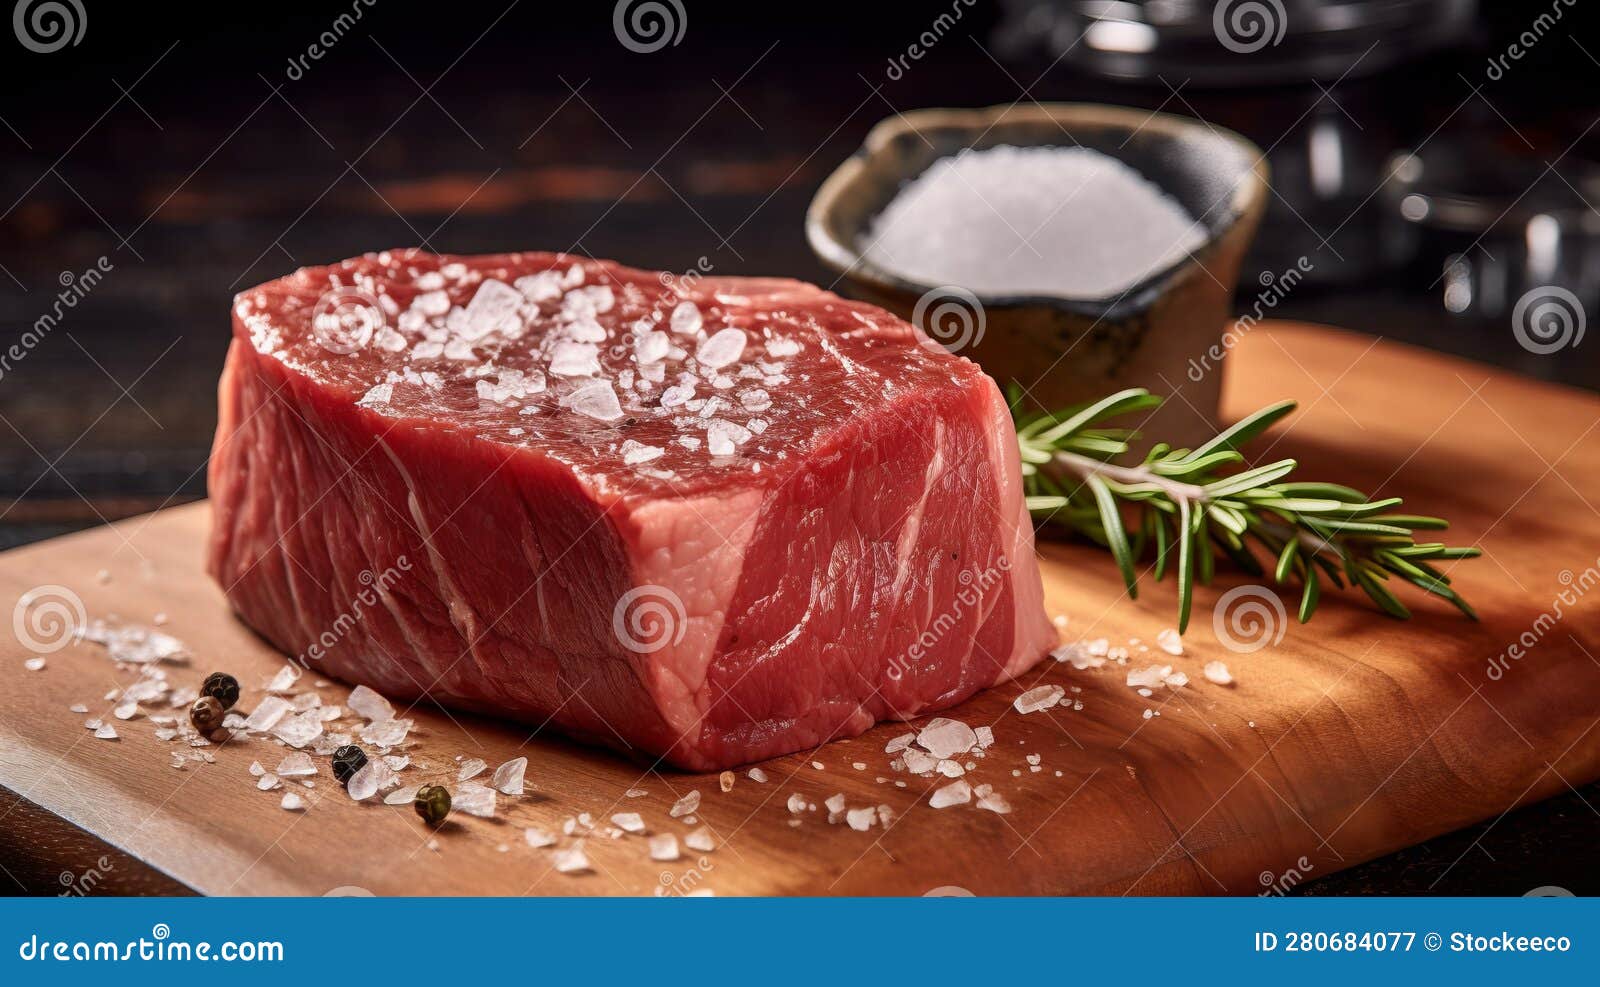 8k resolution steak with salt and herbs